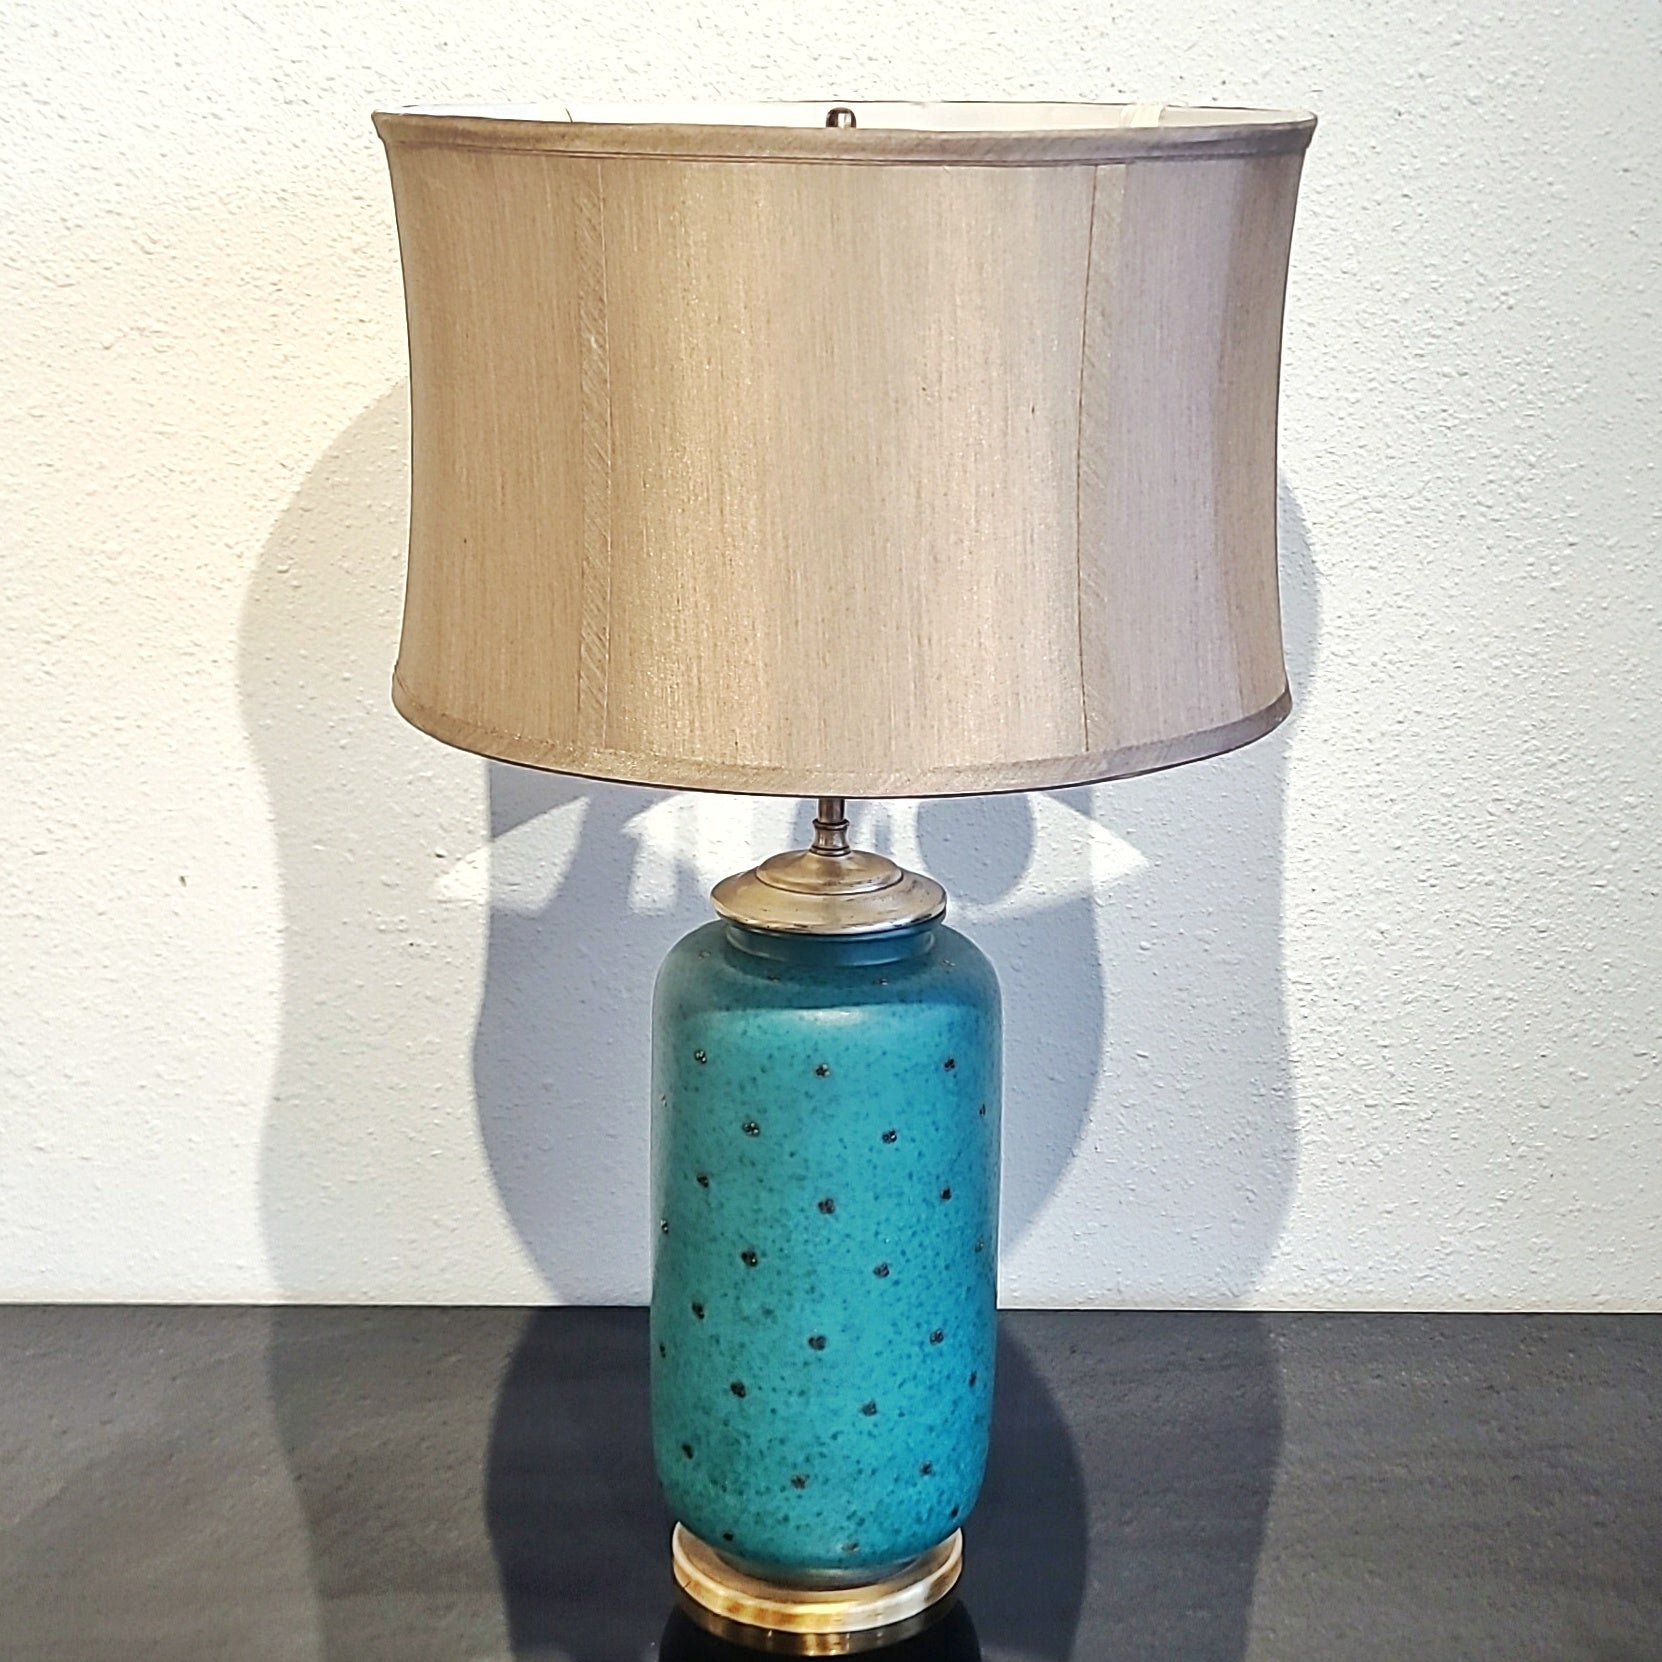 TALL 'ARGENTA' TABLE LAMP BY WILHELM KÅGE FOR GUSTAVSBERG (SWEDEN)